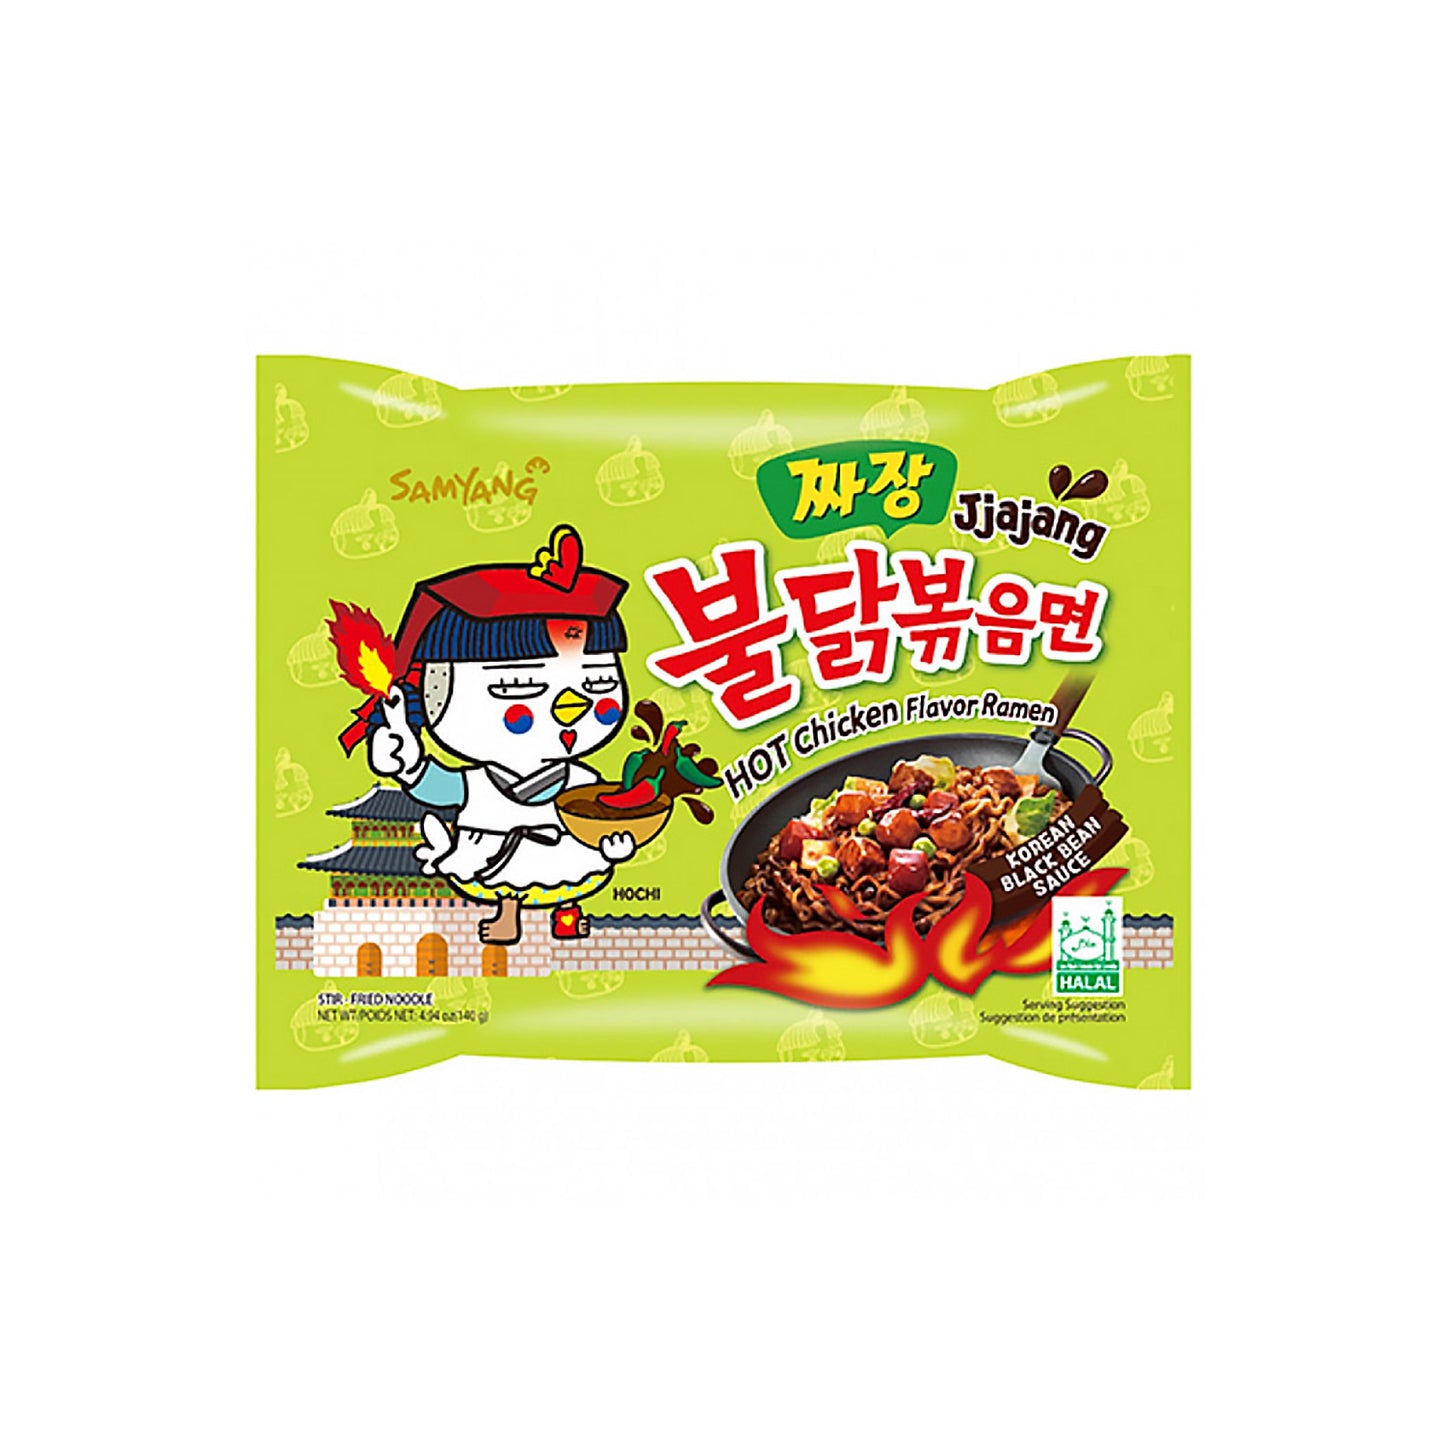 Samyang Jjajang Hot Chicken Ramen